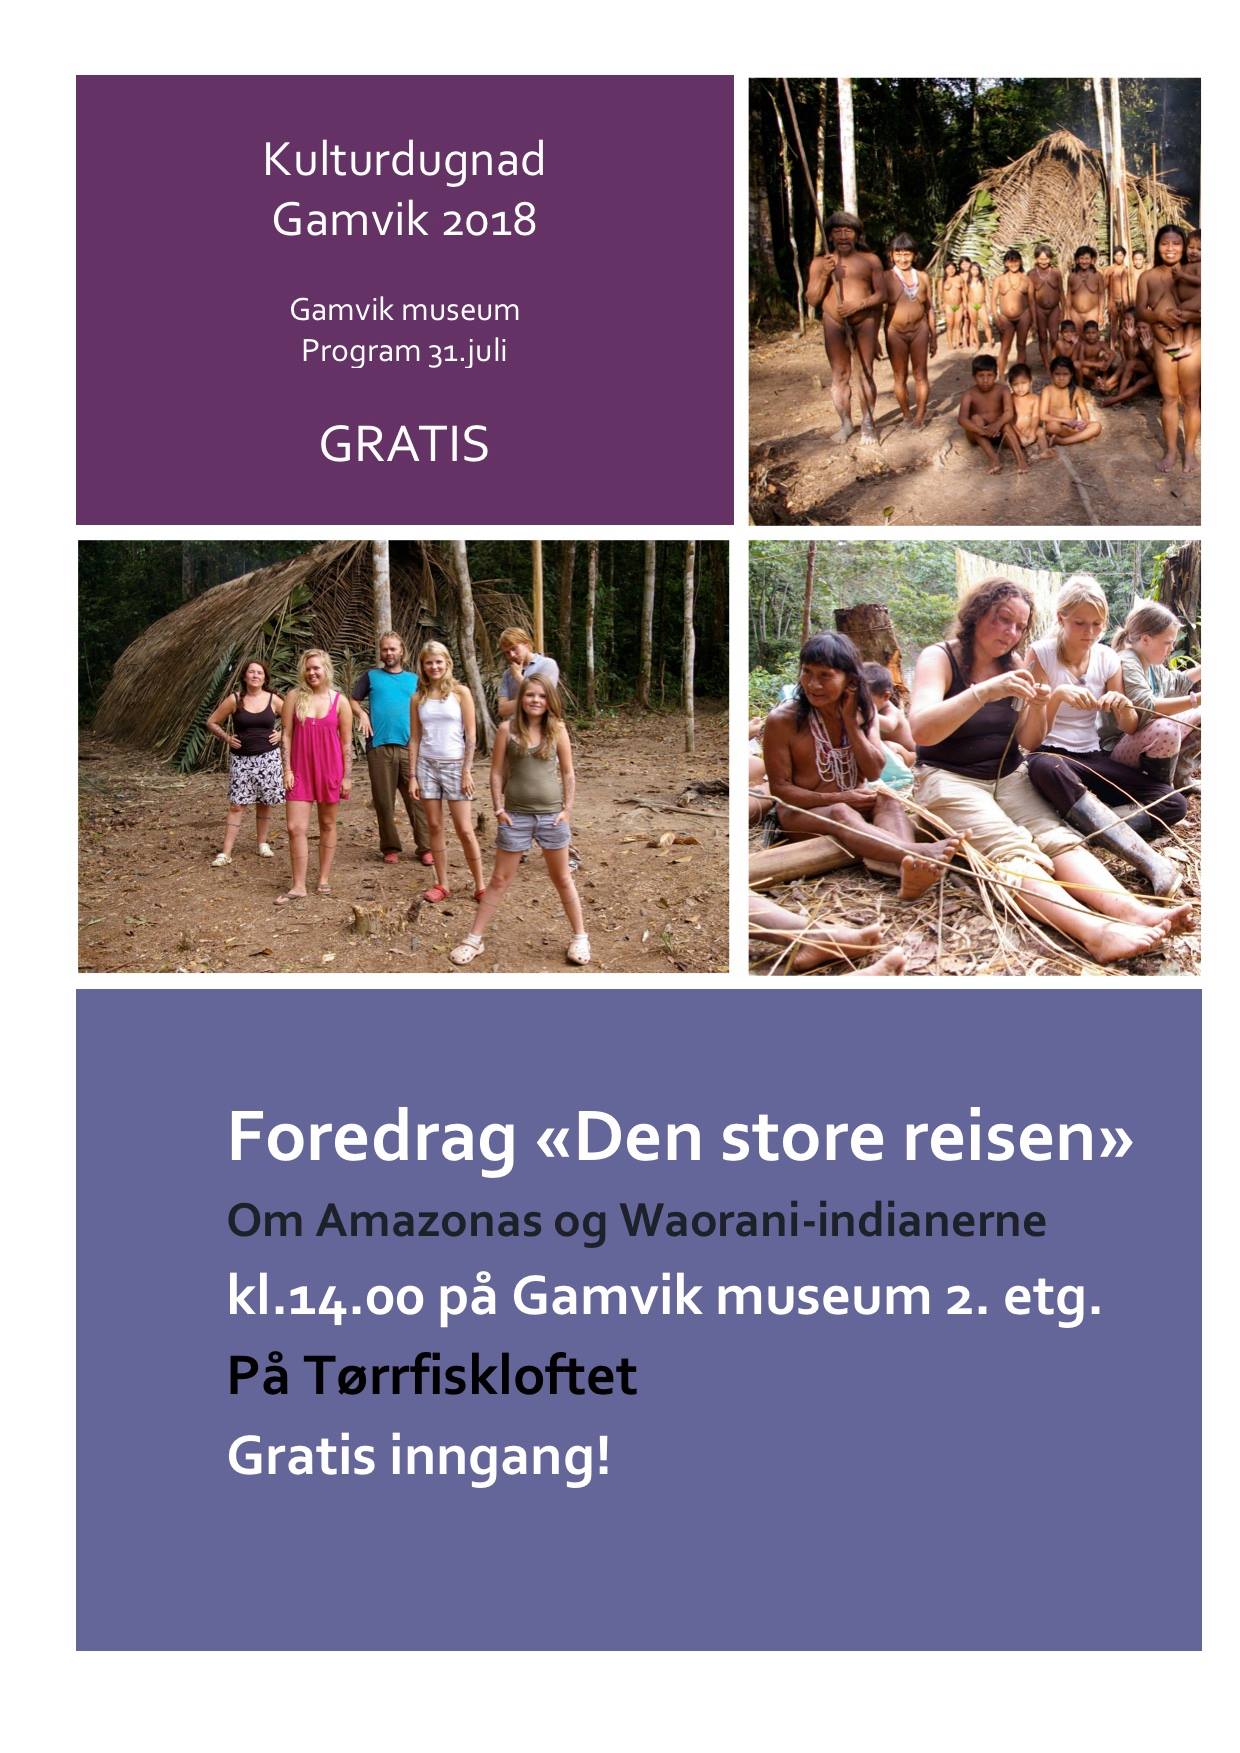 Program Kulturdugnad Gamvik 2018 5